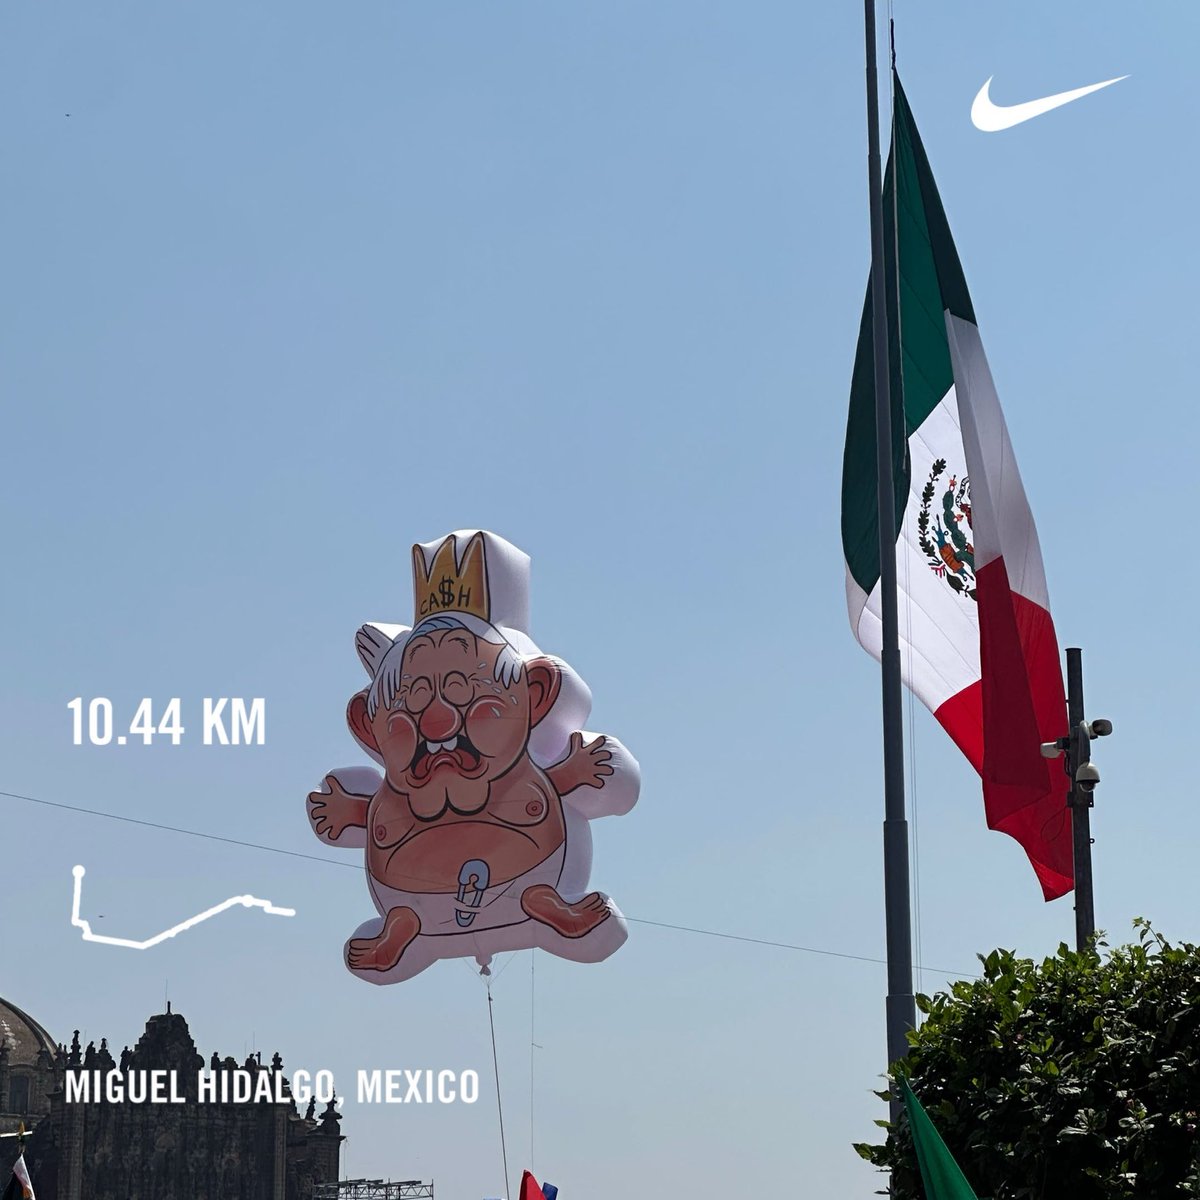 Ran 10.44 kilometers with Nike⁠ Run Club #JustDoIt #runhappy #RunOscarRun #CDMX #instarun #run #instarunners #Mexico #MexicoCity #10km #instaCDMX @instacdmx #EXATECrun #clubEXATECrunning @instarunmx #ToRunIsToLive #sundayrunday #marearosa